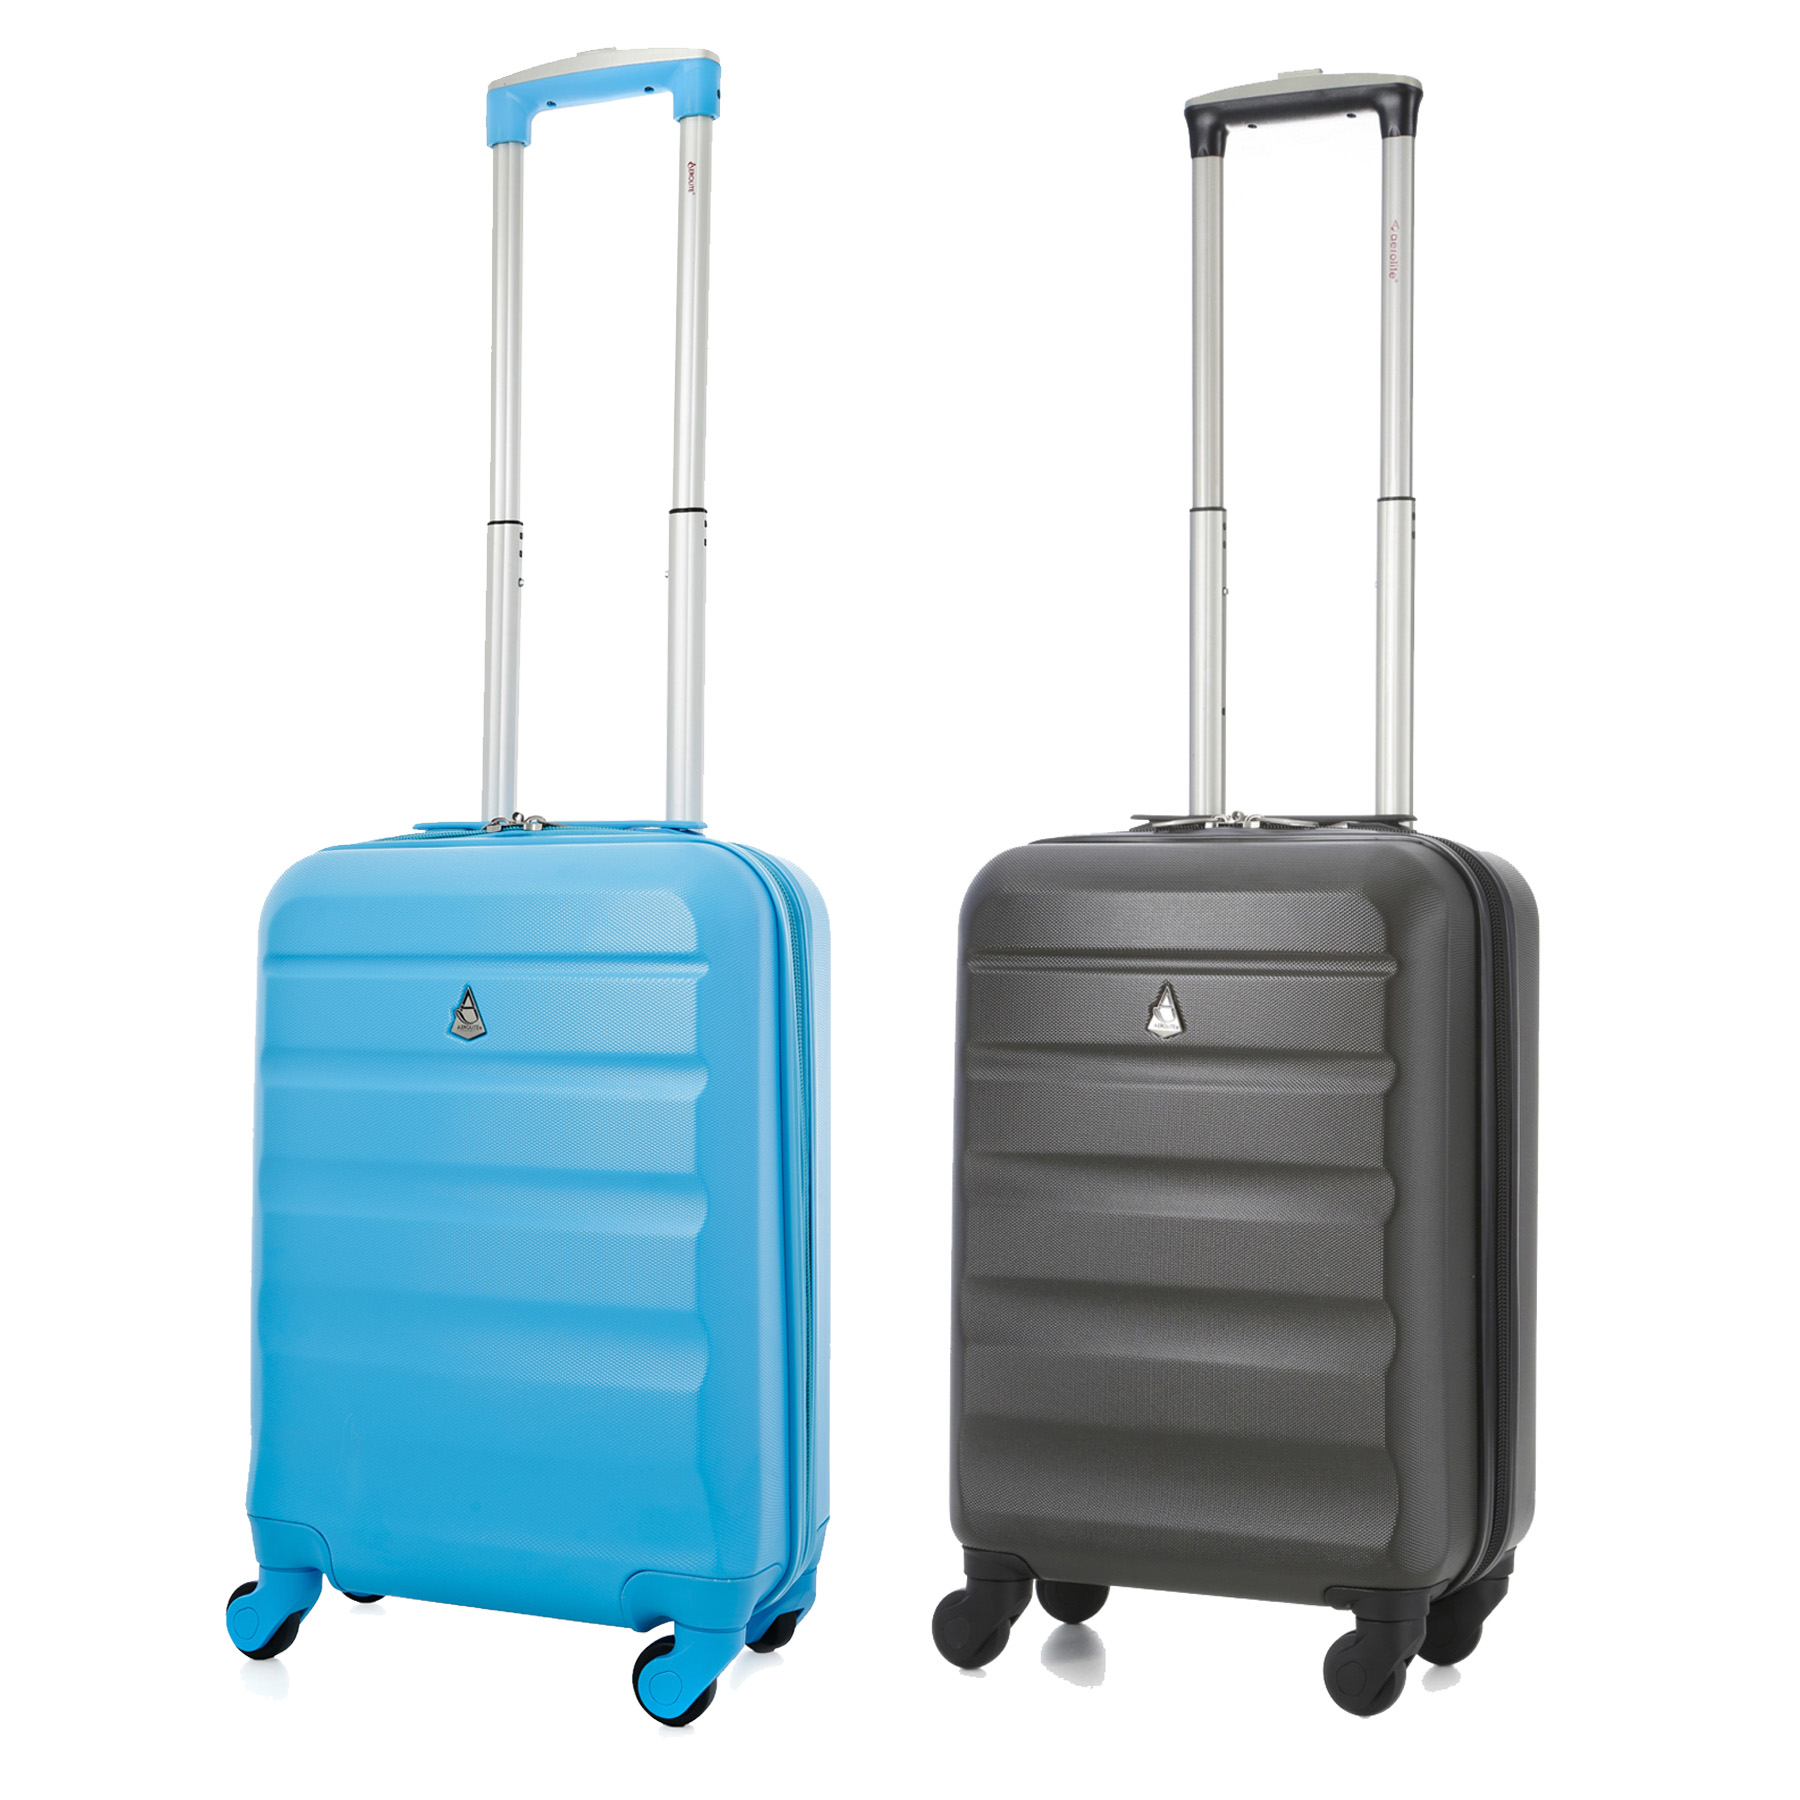 Aerolite Super Lightweight ABS Hard Shell Suitcase - 4 Wheels Set of 2